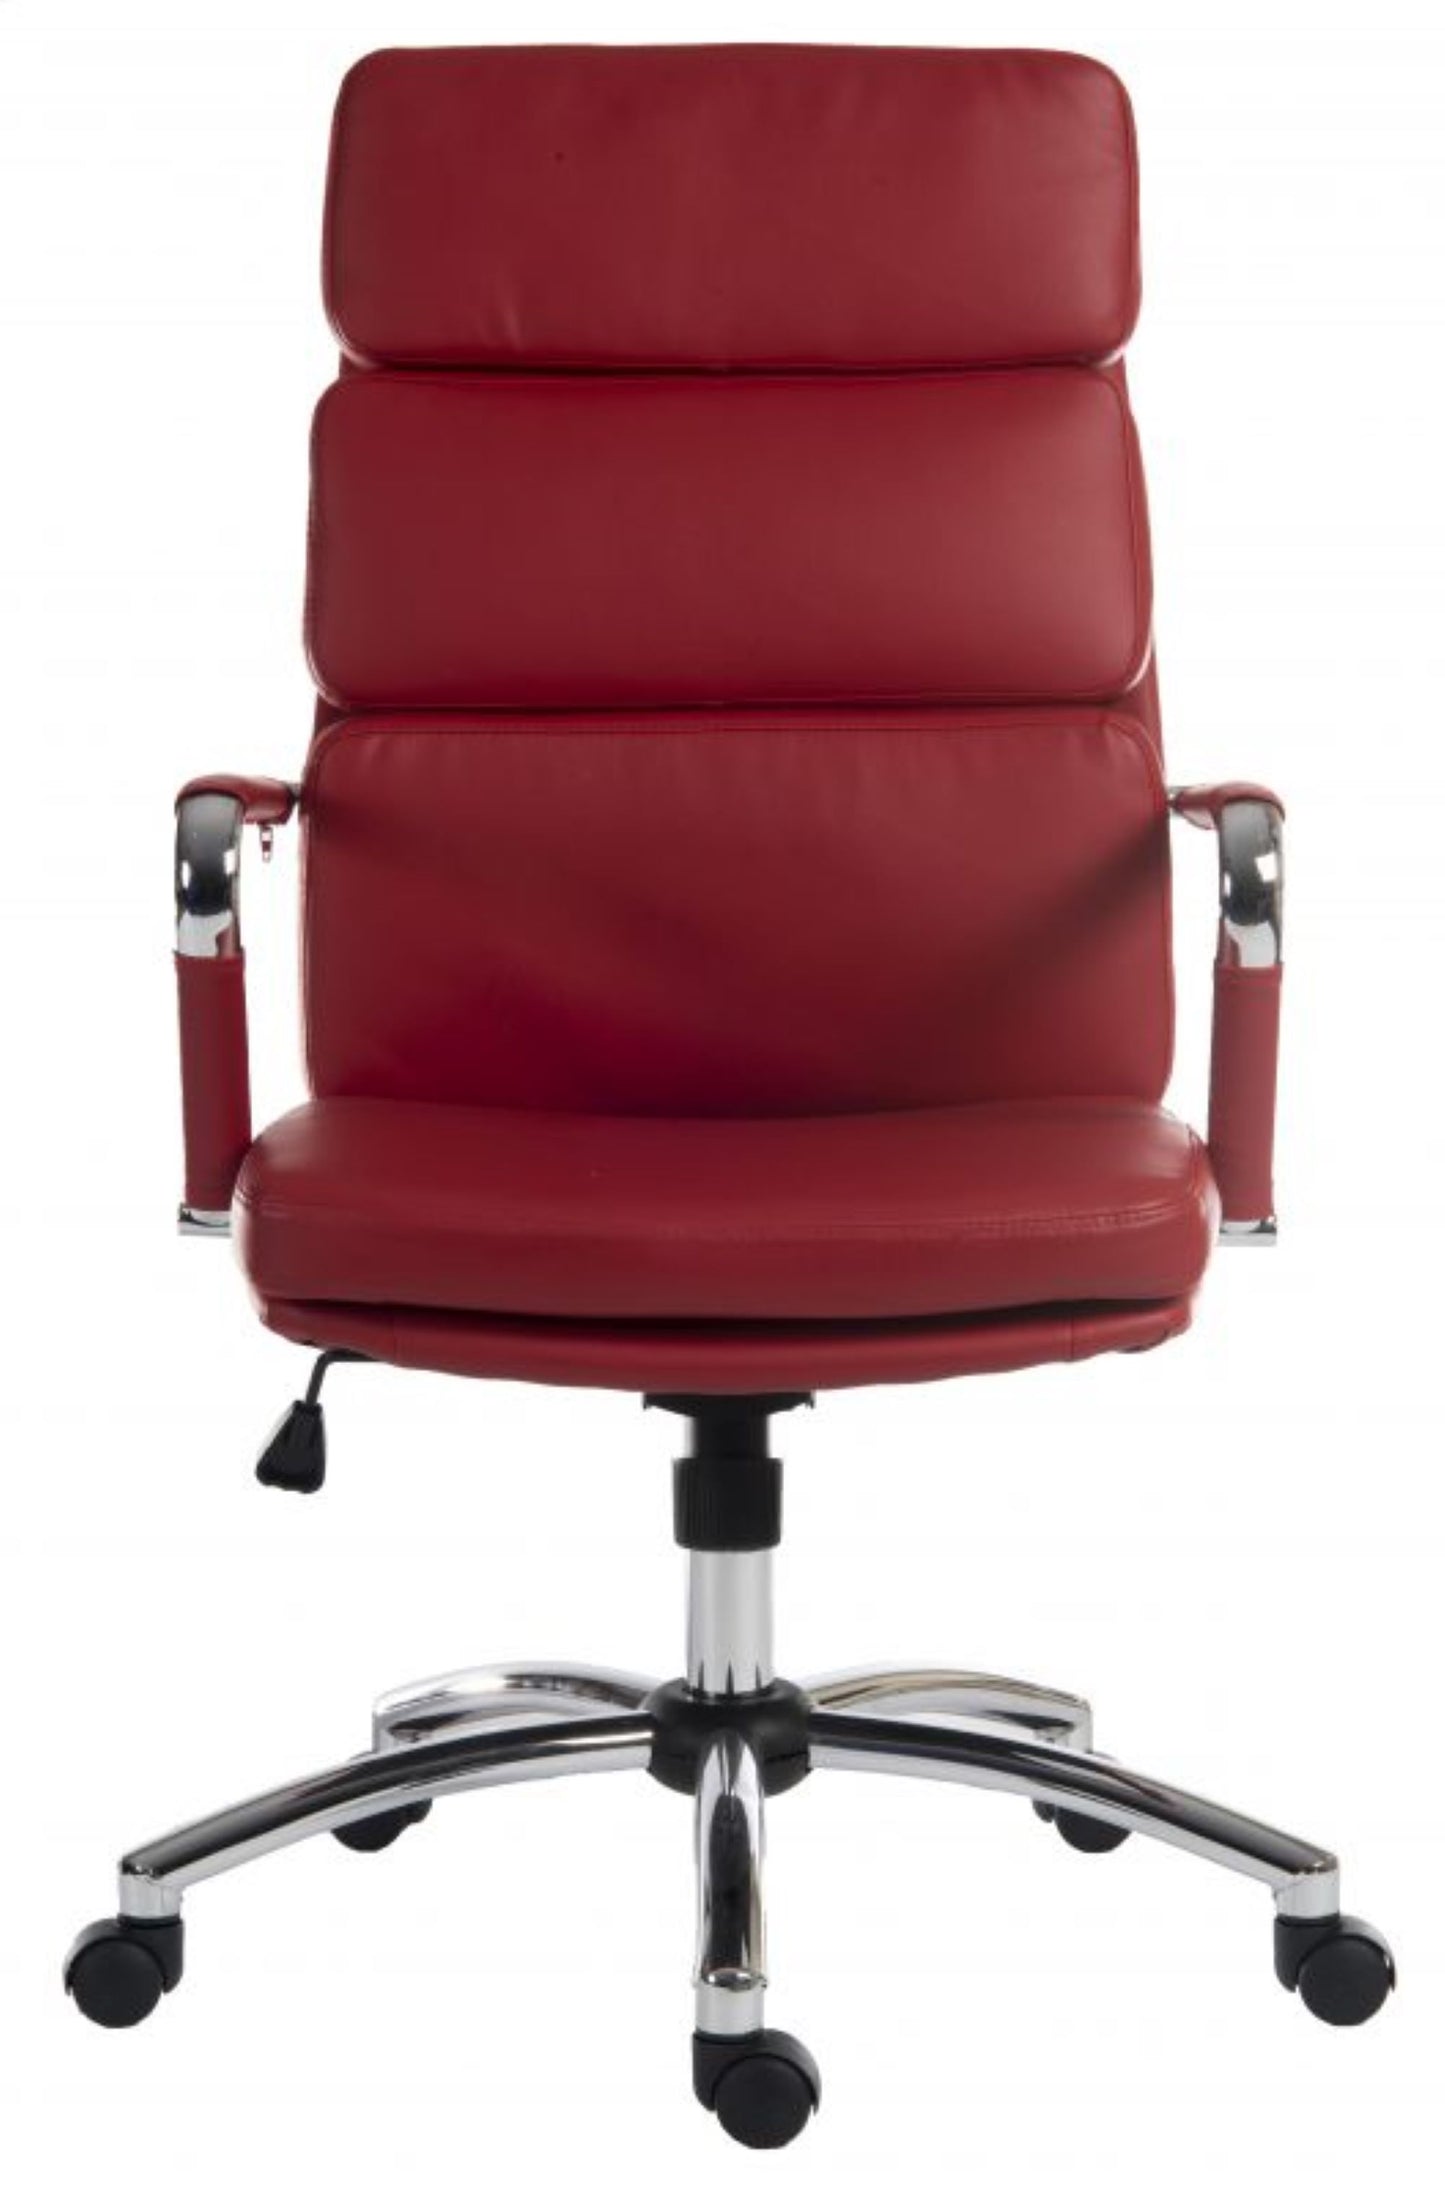 Retro style executive chair